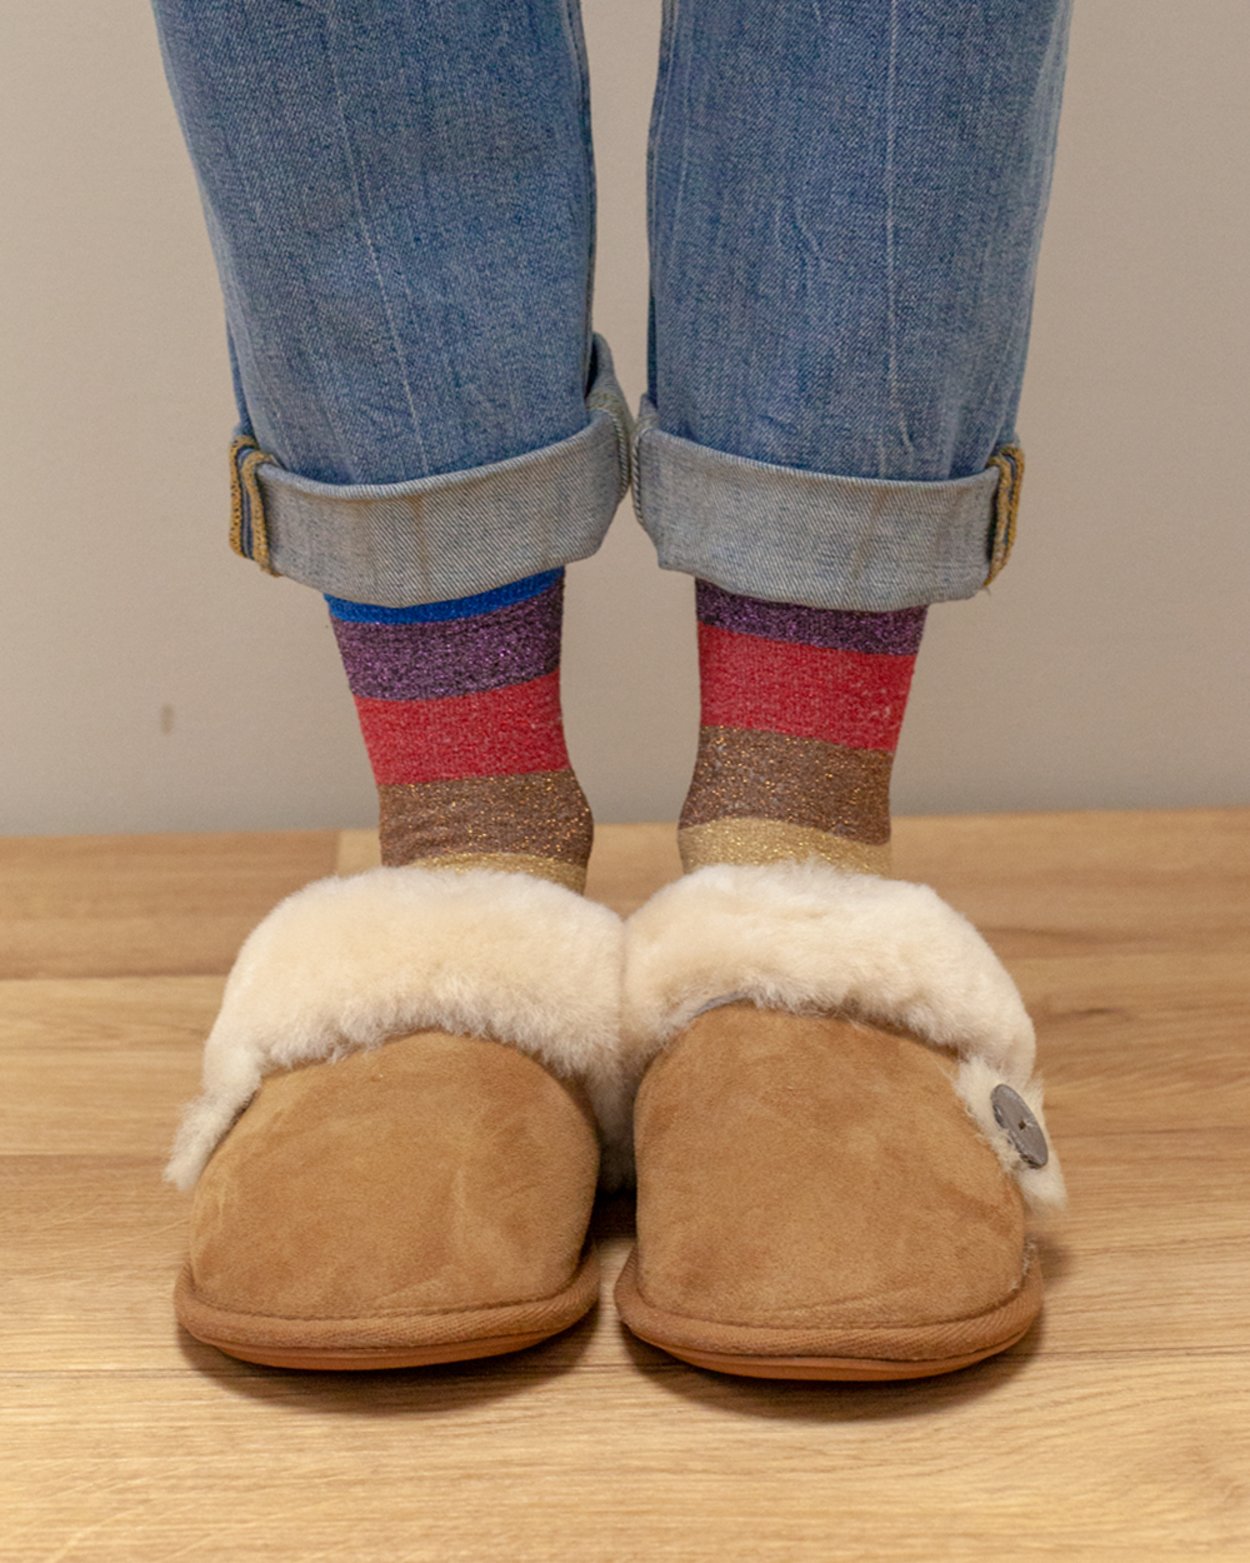 buy sheepskin slippers